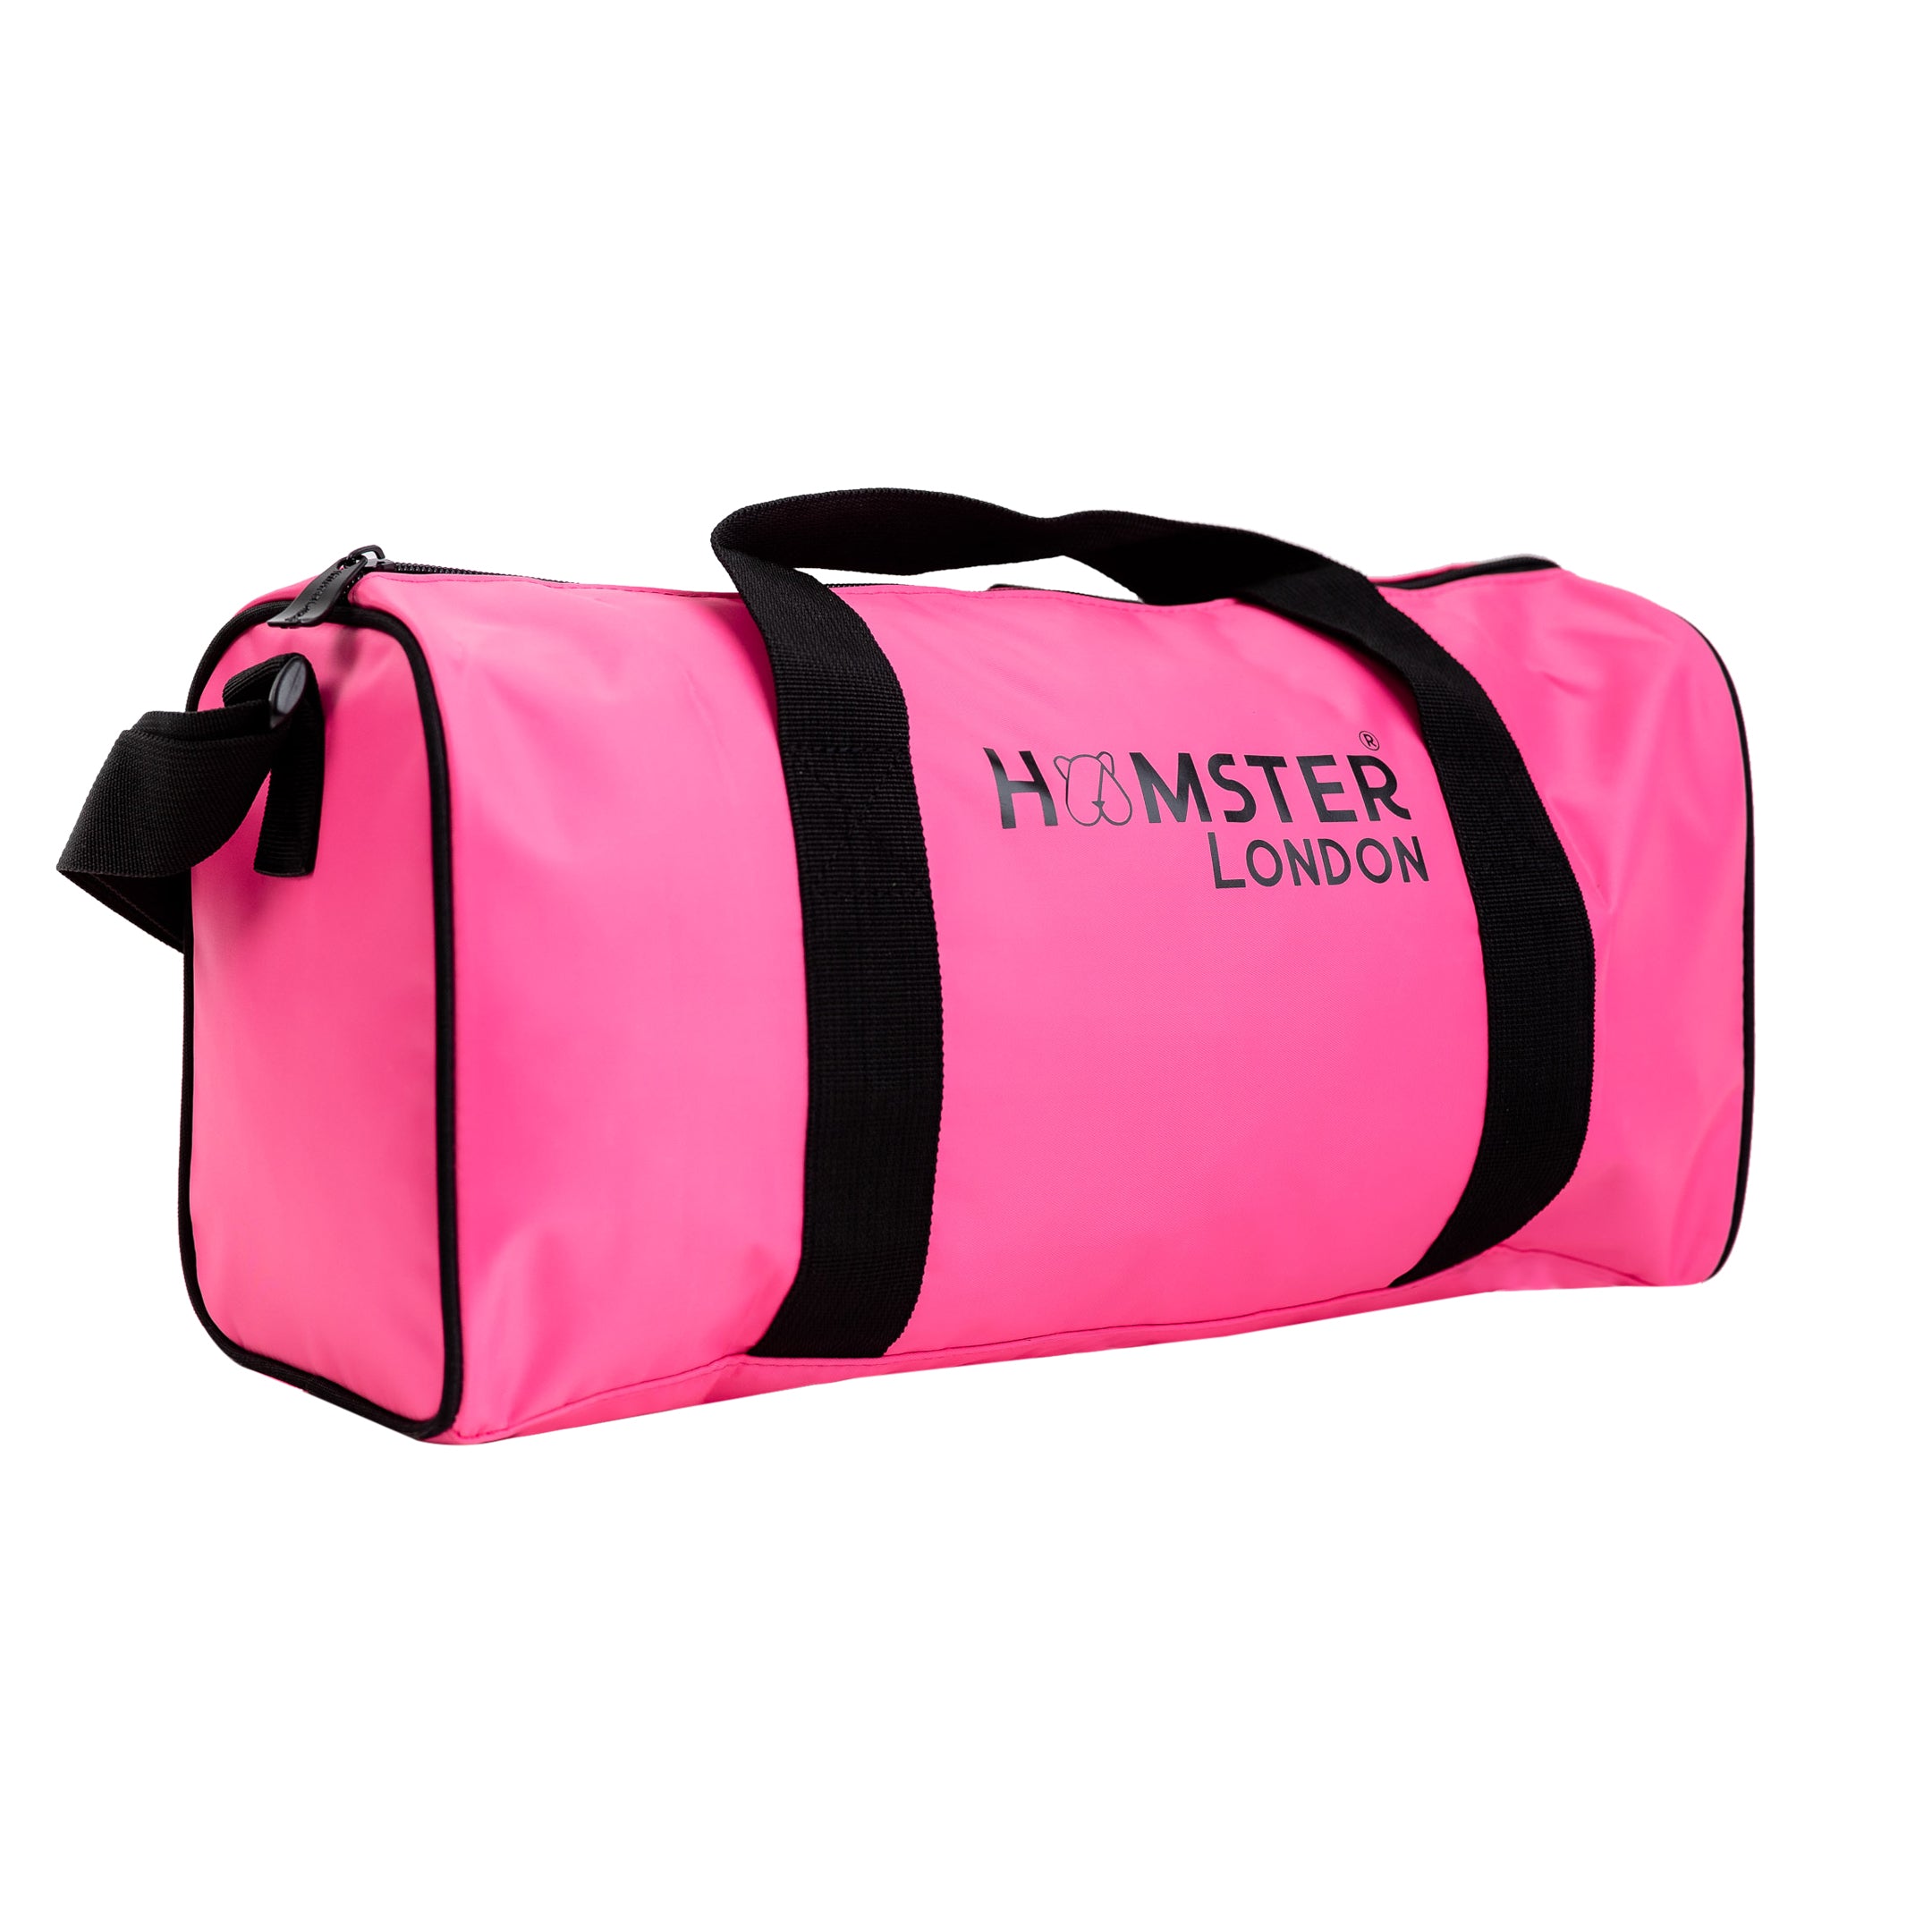 HL Neon Hype Duffle Bag Pink